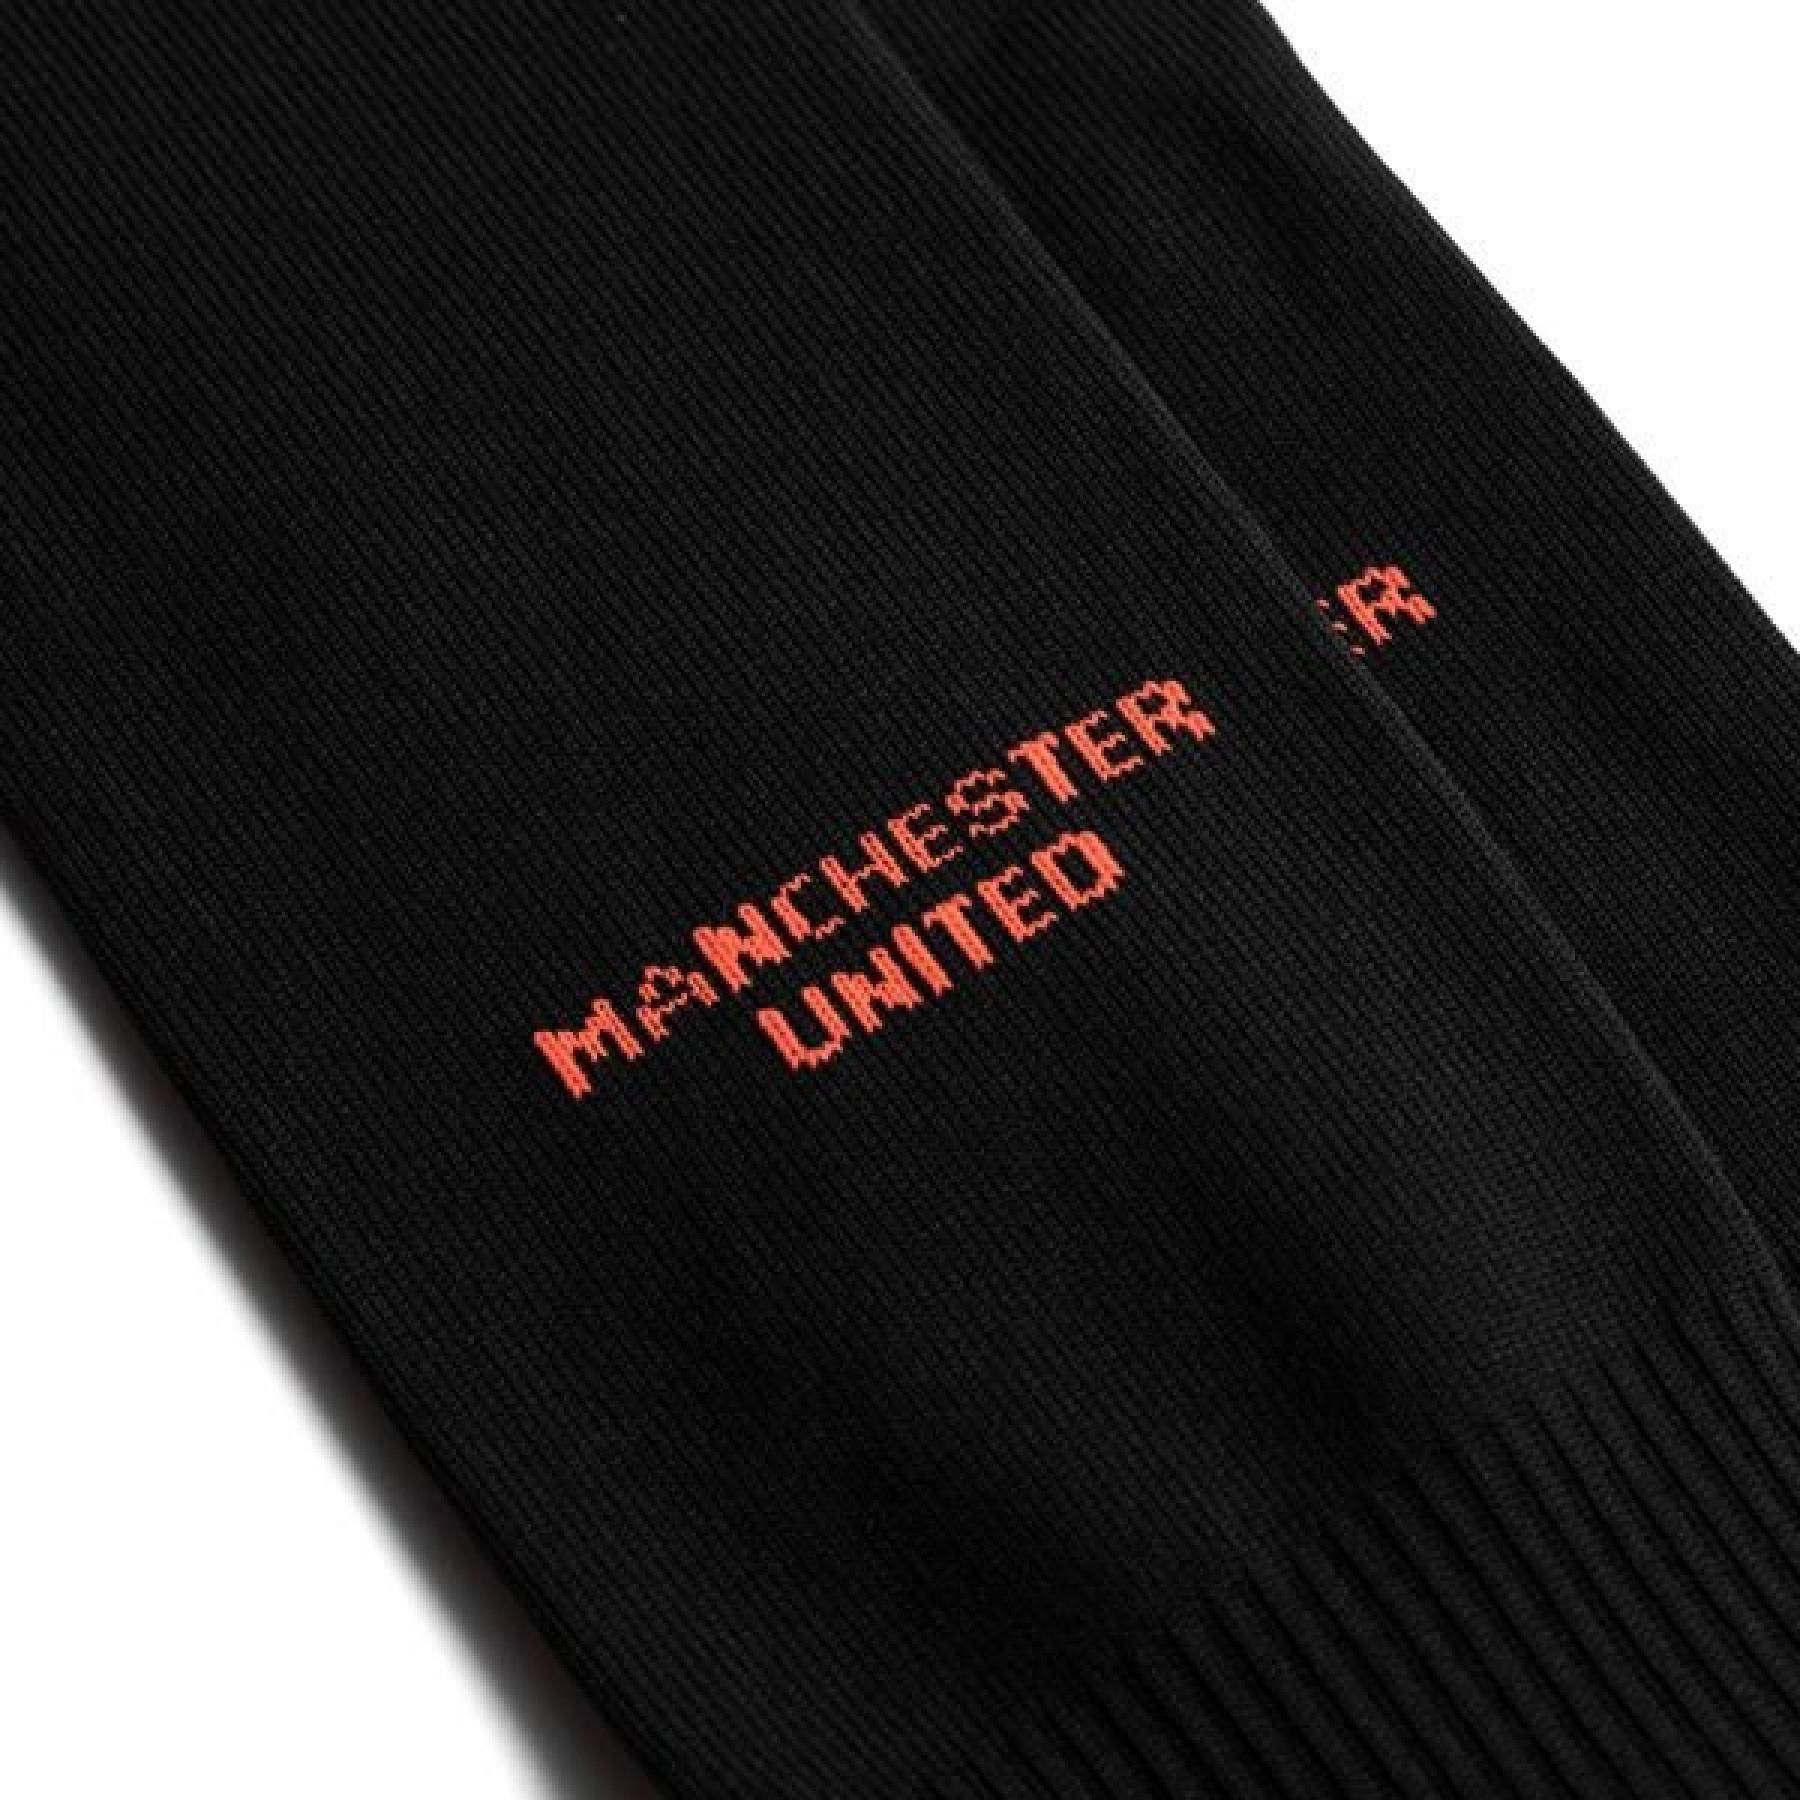 Terceiras meias Manchester United 2019/20